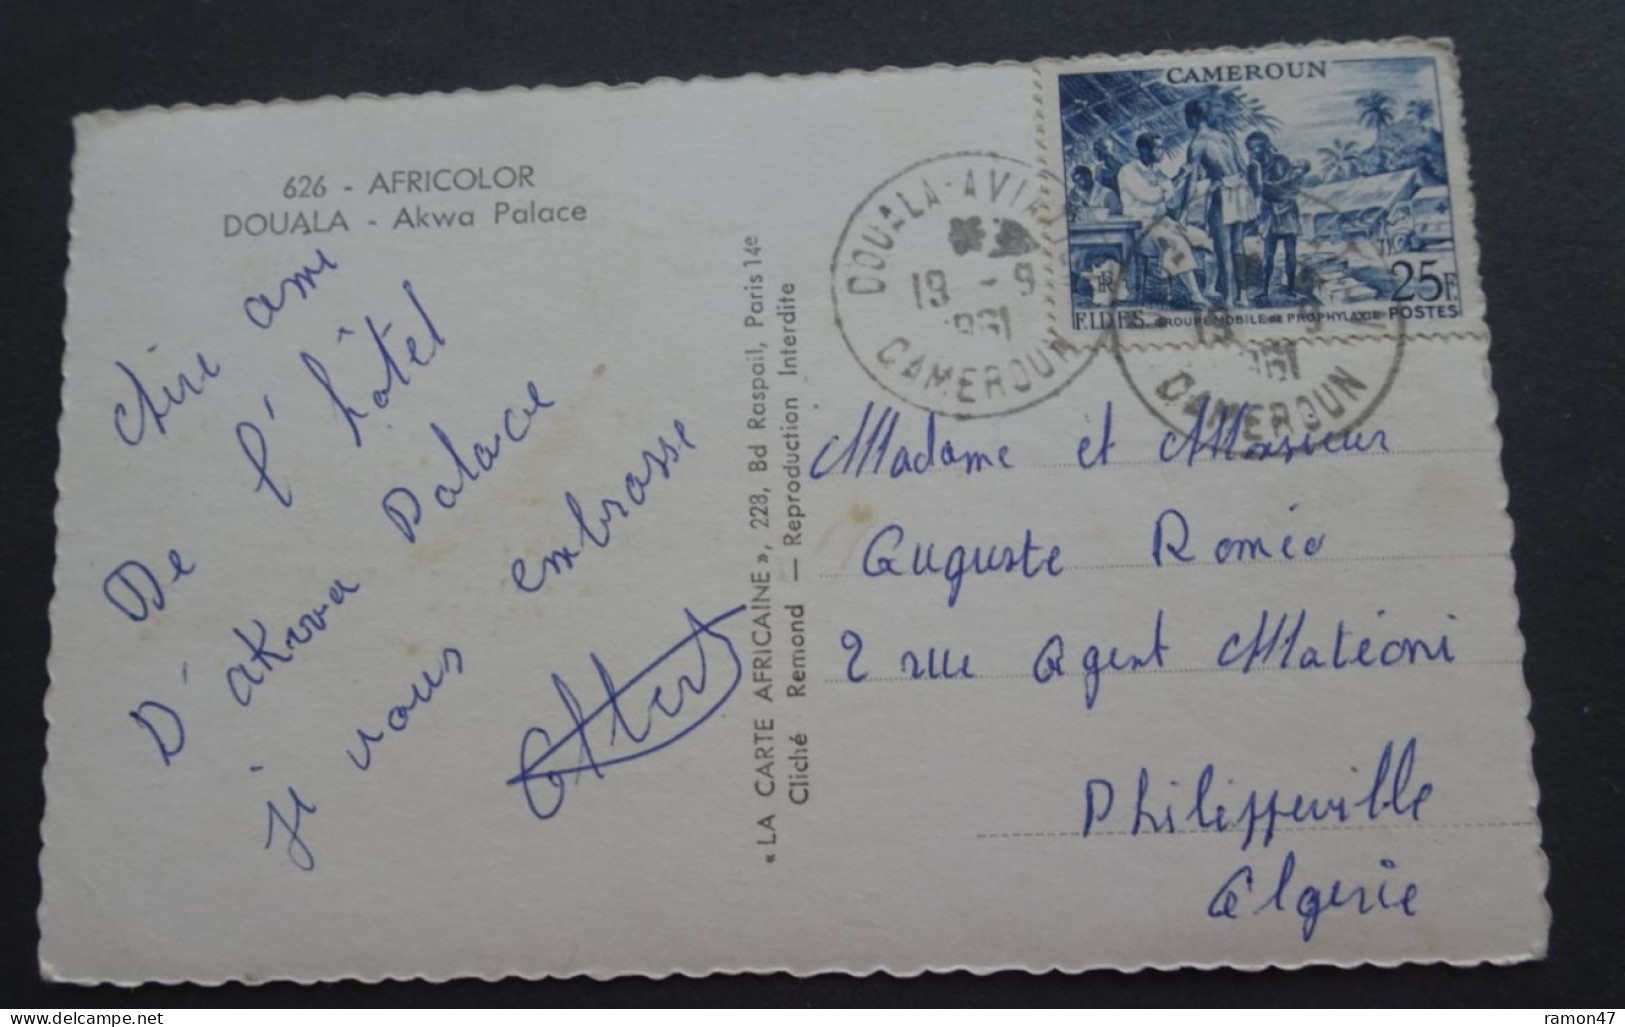 Douala - Akwa Palace - La Carte Africaine, Paris - # 626 - Cameroun